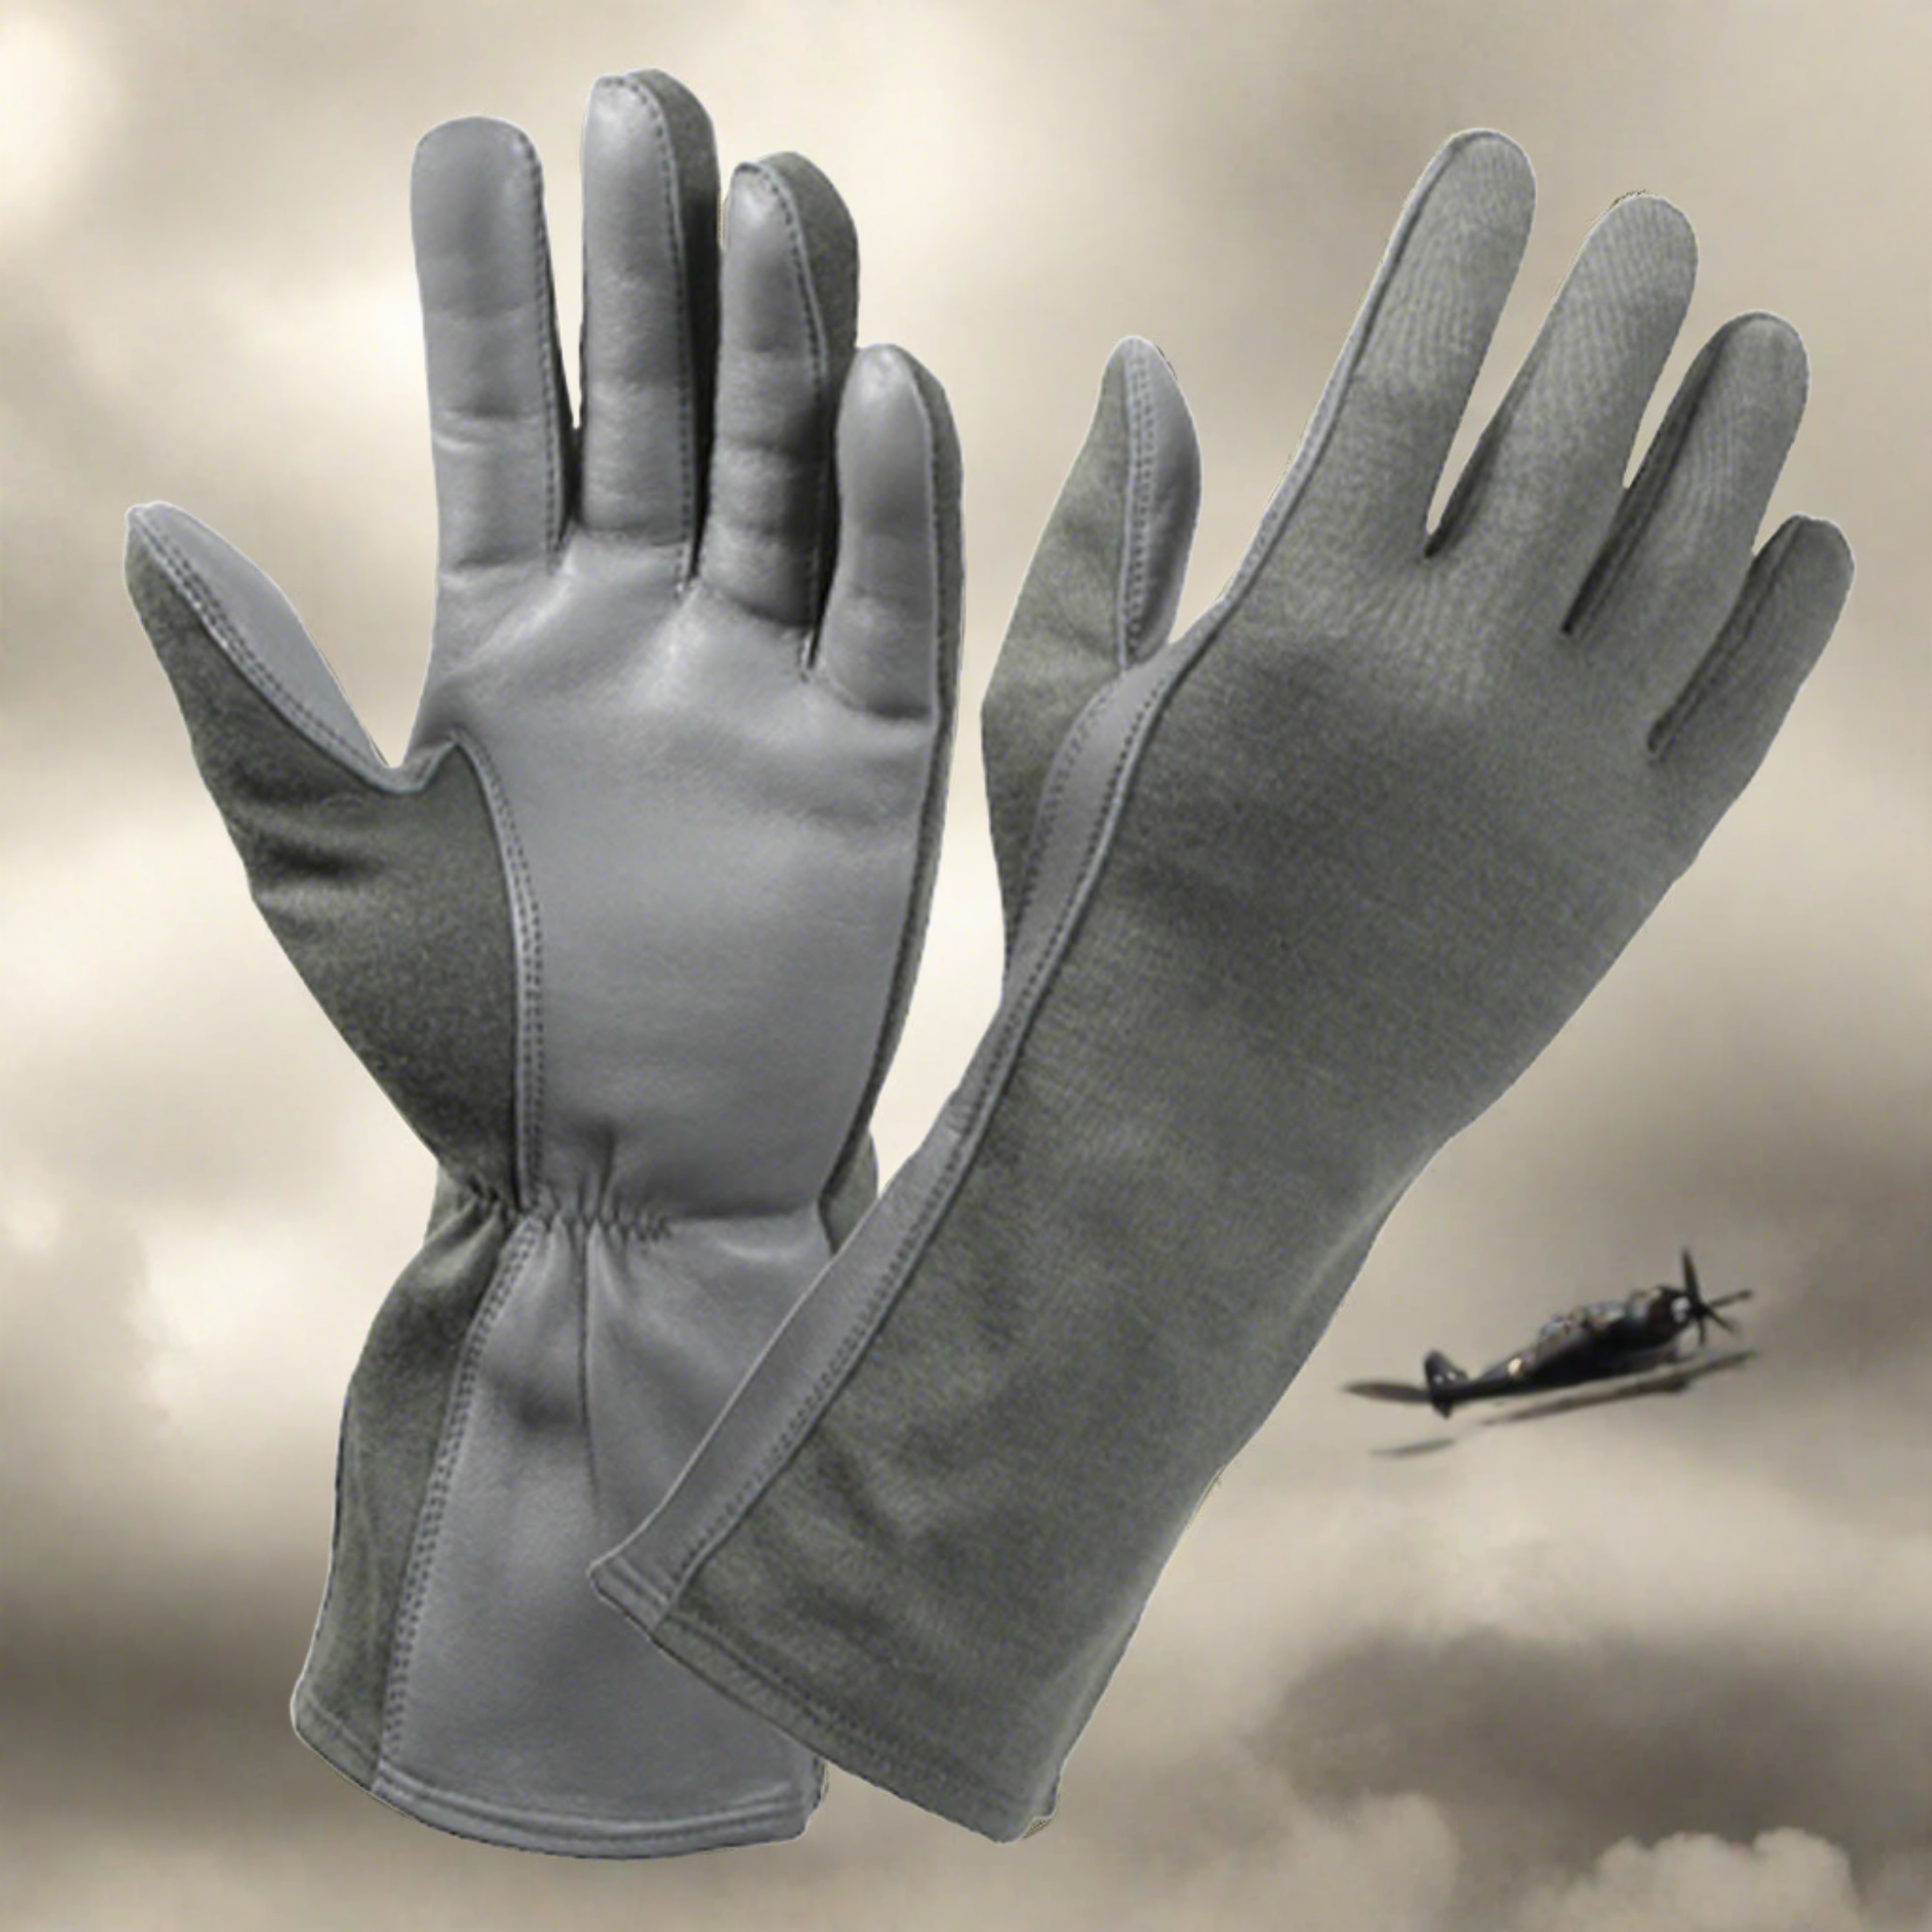 Flight Gloves - Rothco G.I. Type Flame & Heat Resistant Flight Gloves